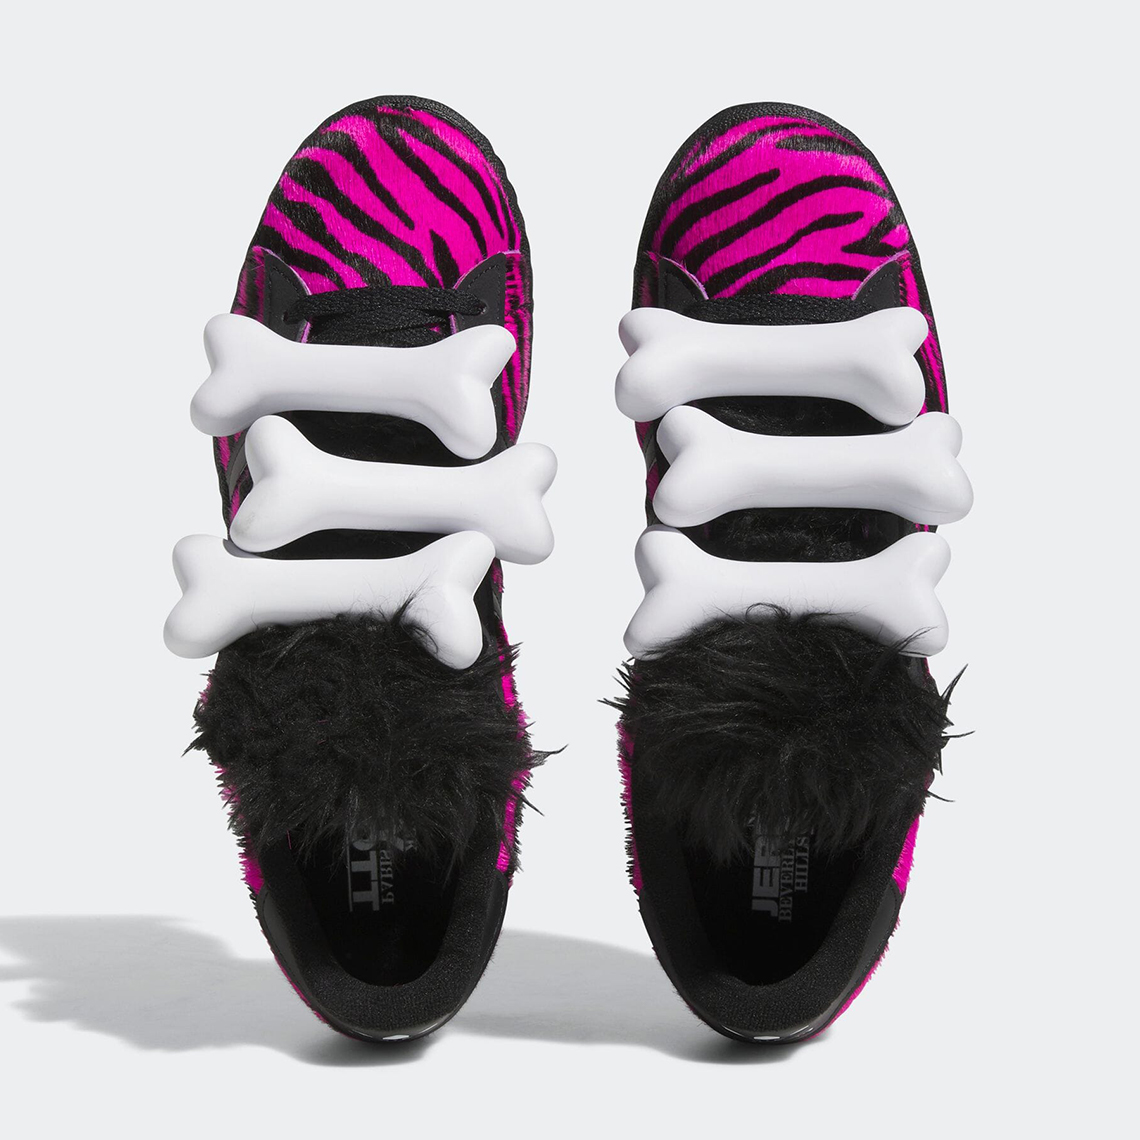 Jeremy Scott x Adidas Sneakers for Women - Poshmark